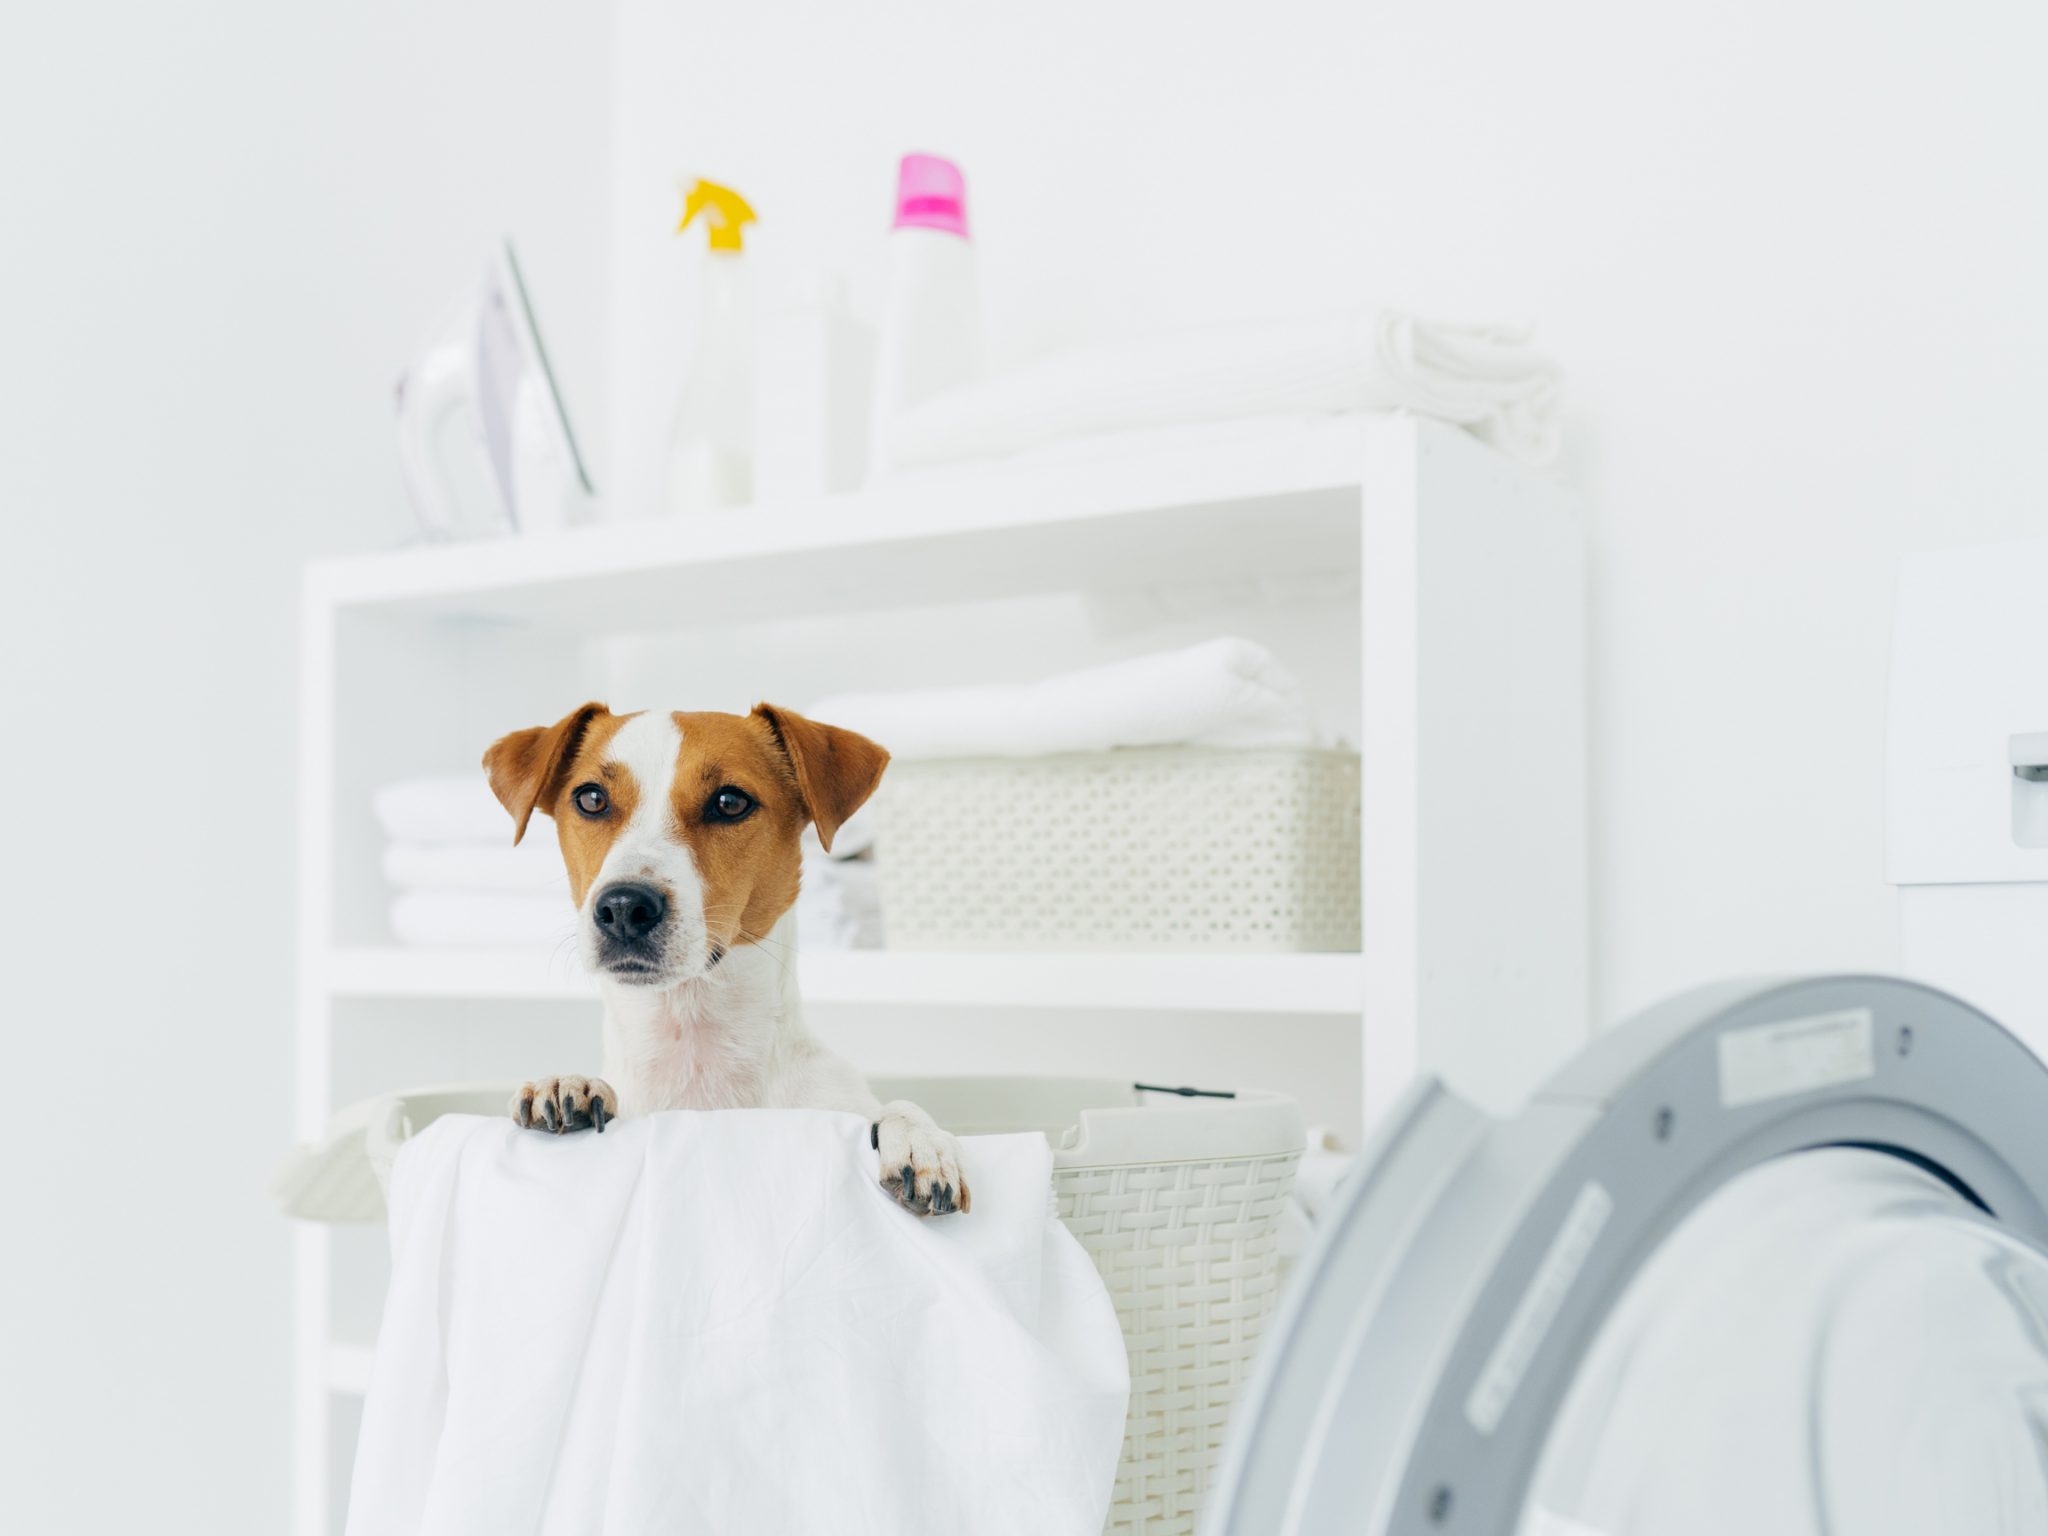 small dog peeking out of laundry basket next to washing machine